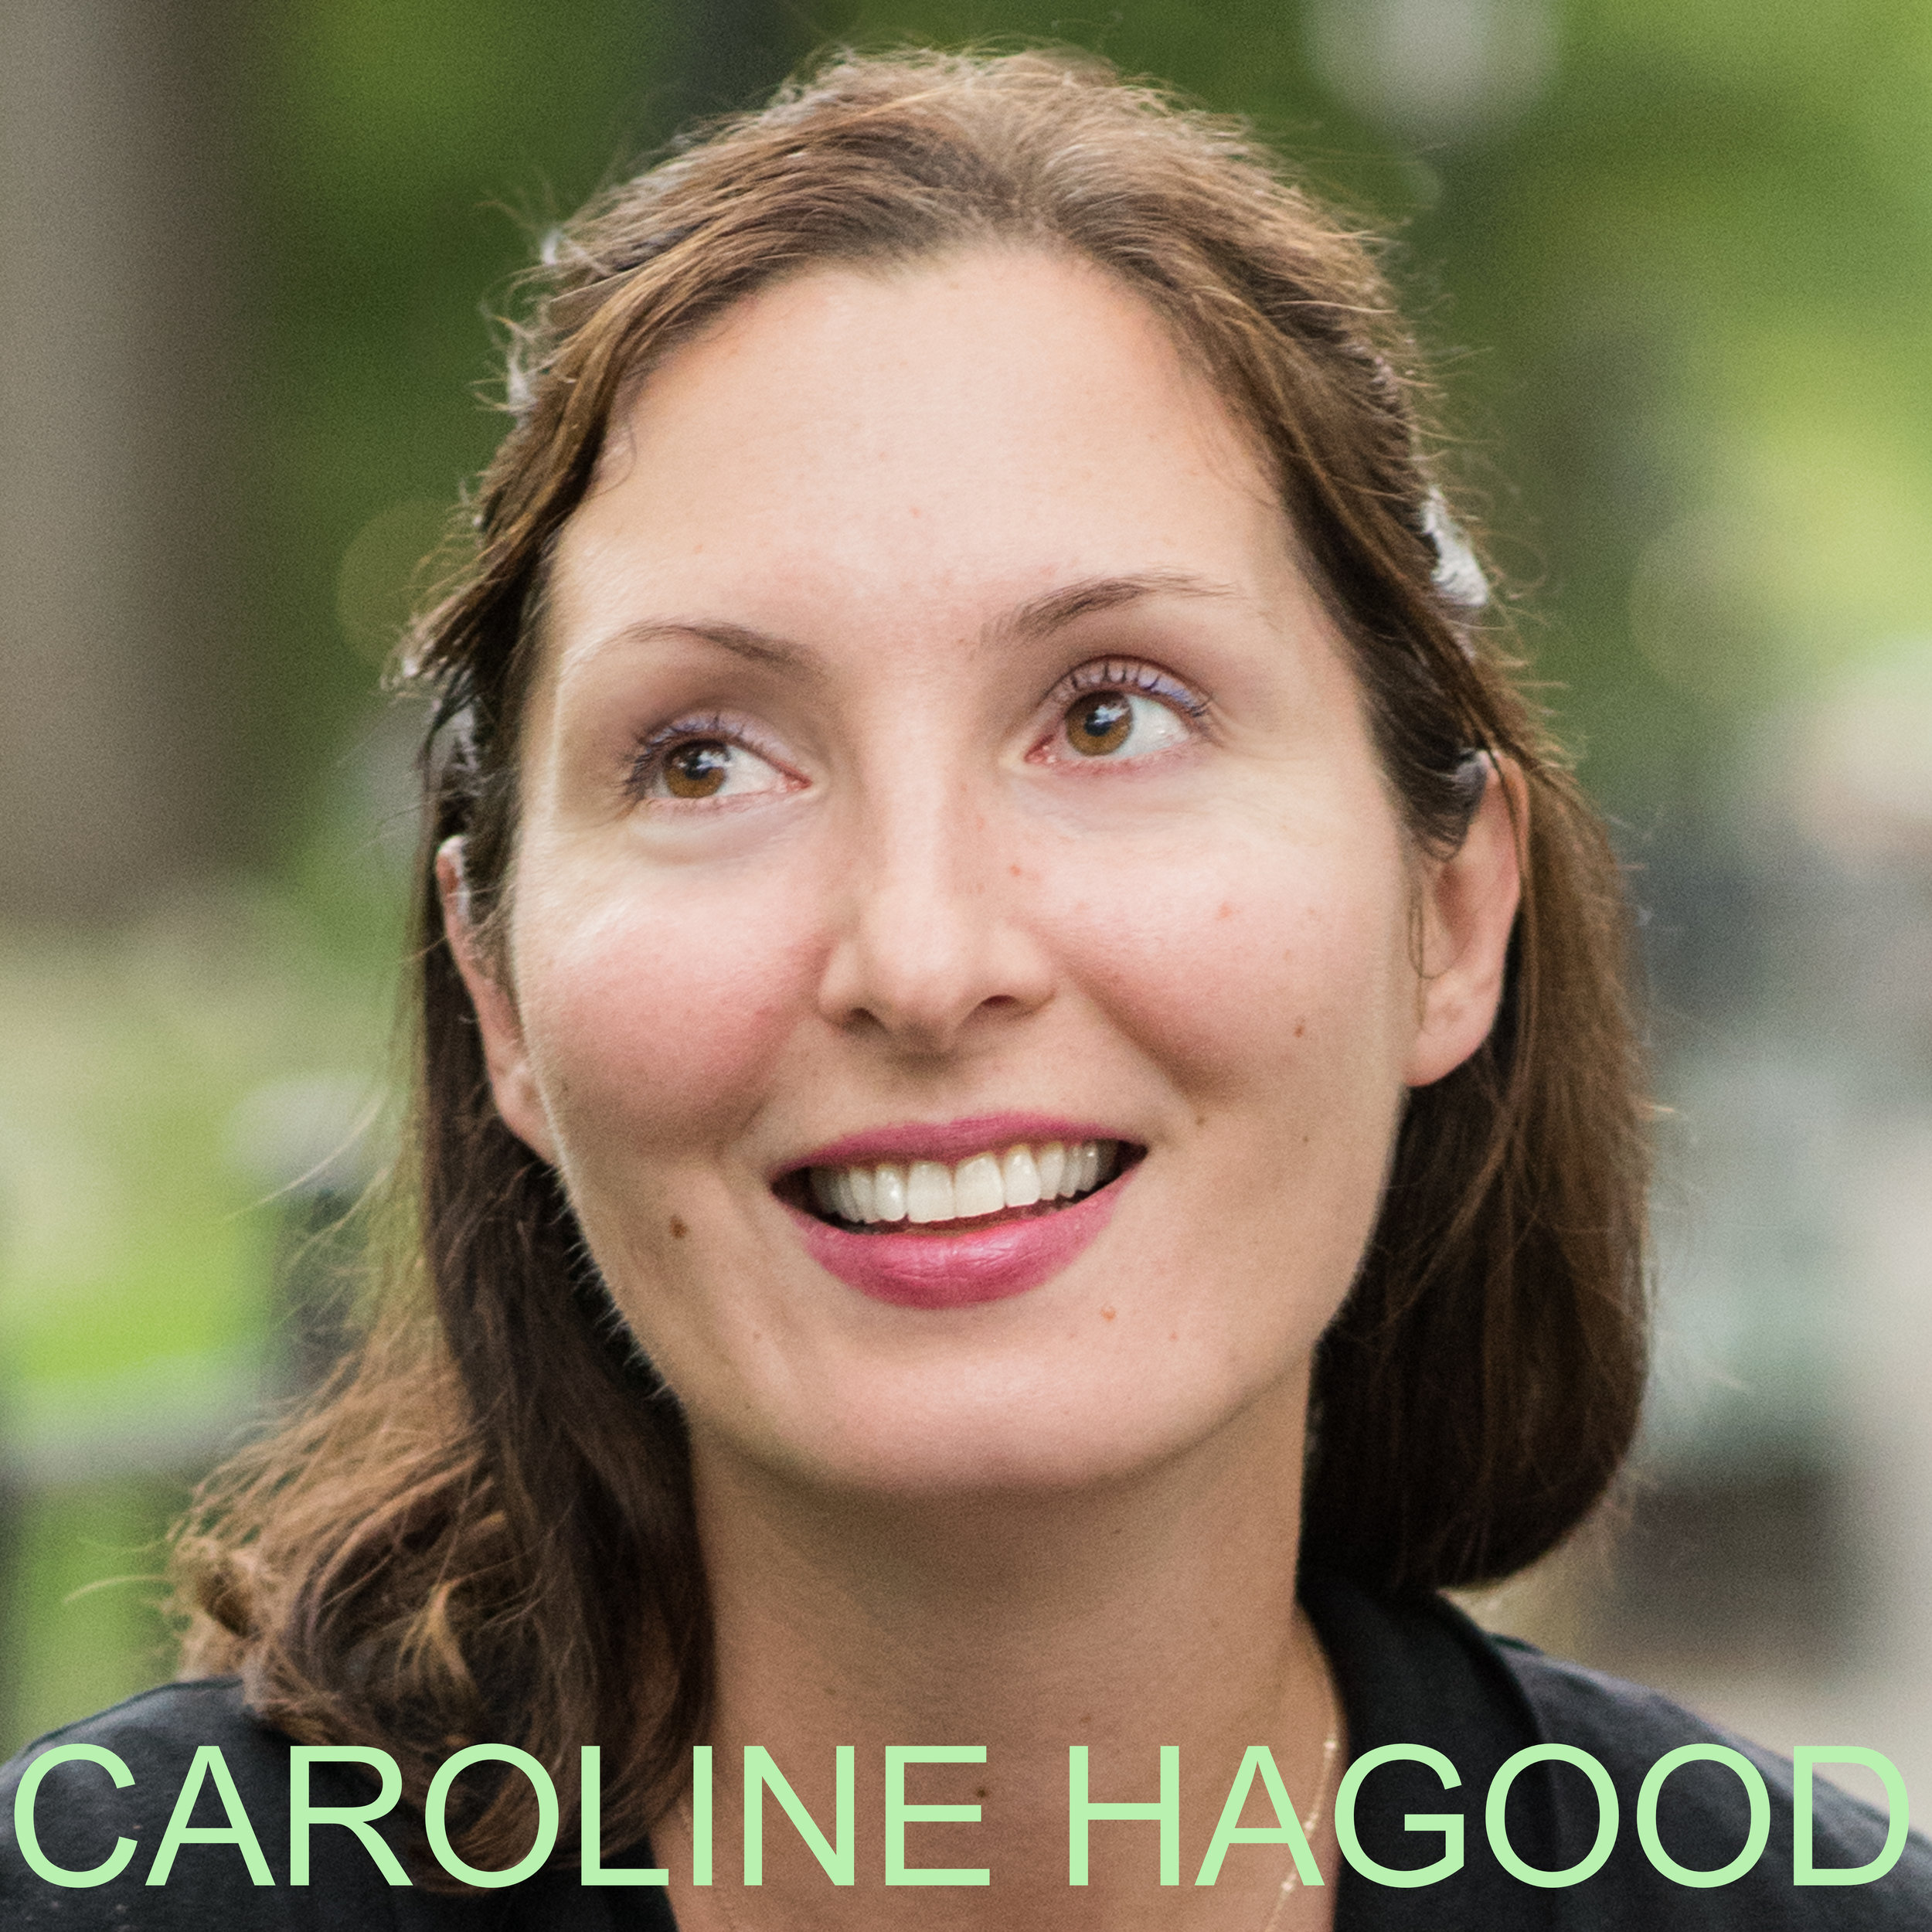 Caroline Hagood Author Photo High Def.jpg